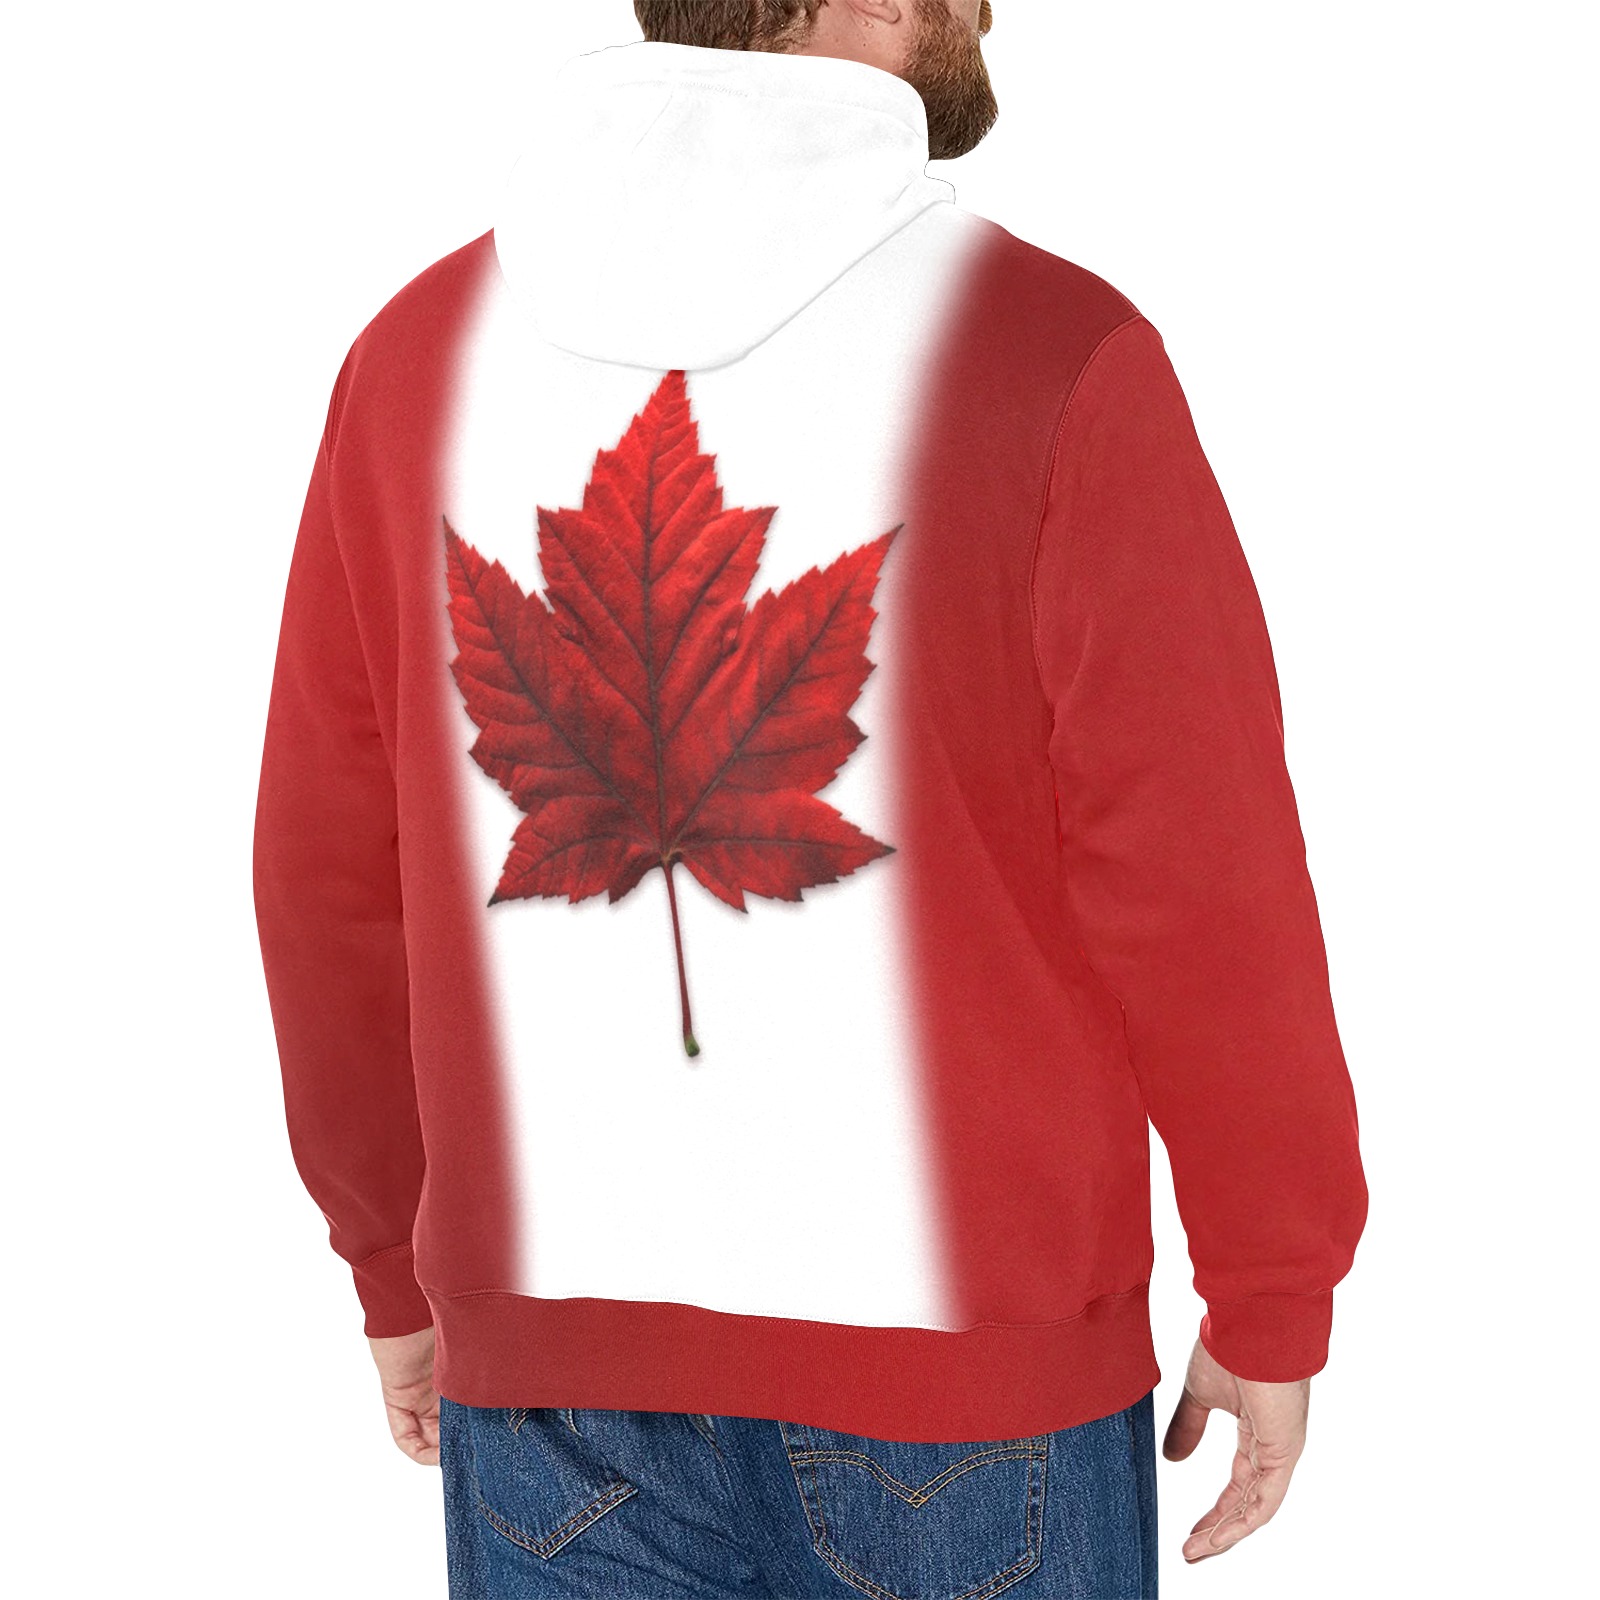 Canada Flag Men's Long Sleeve Fleece Hoodie (Model H55)